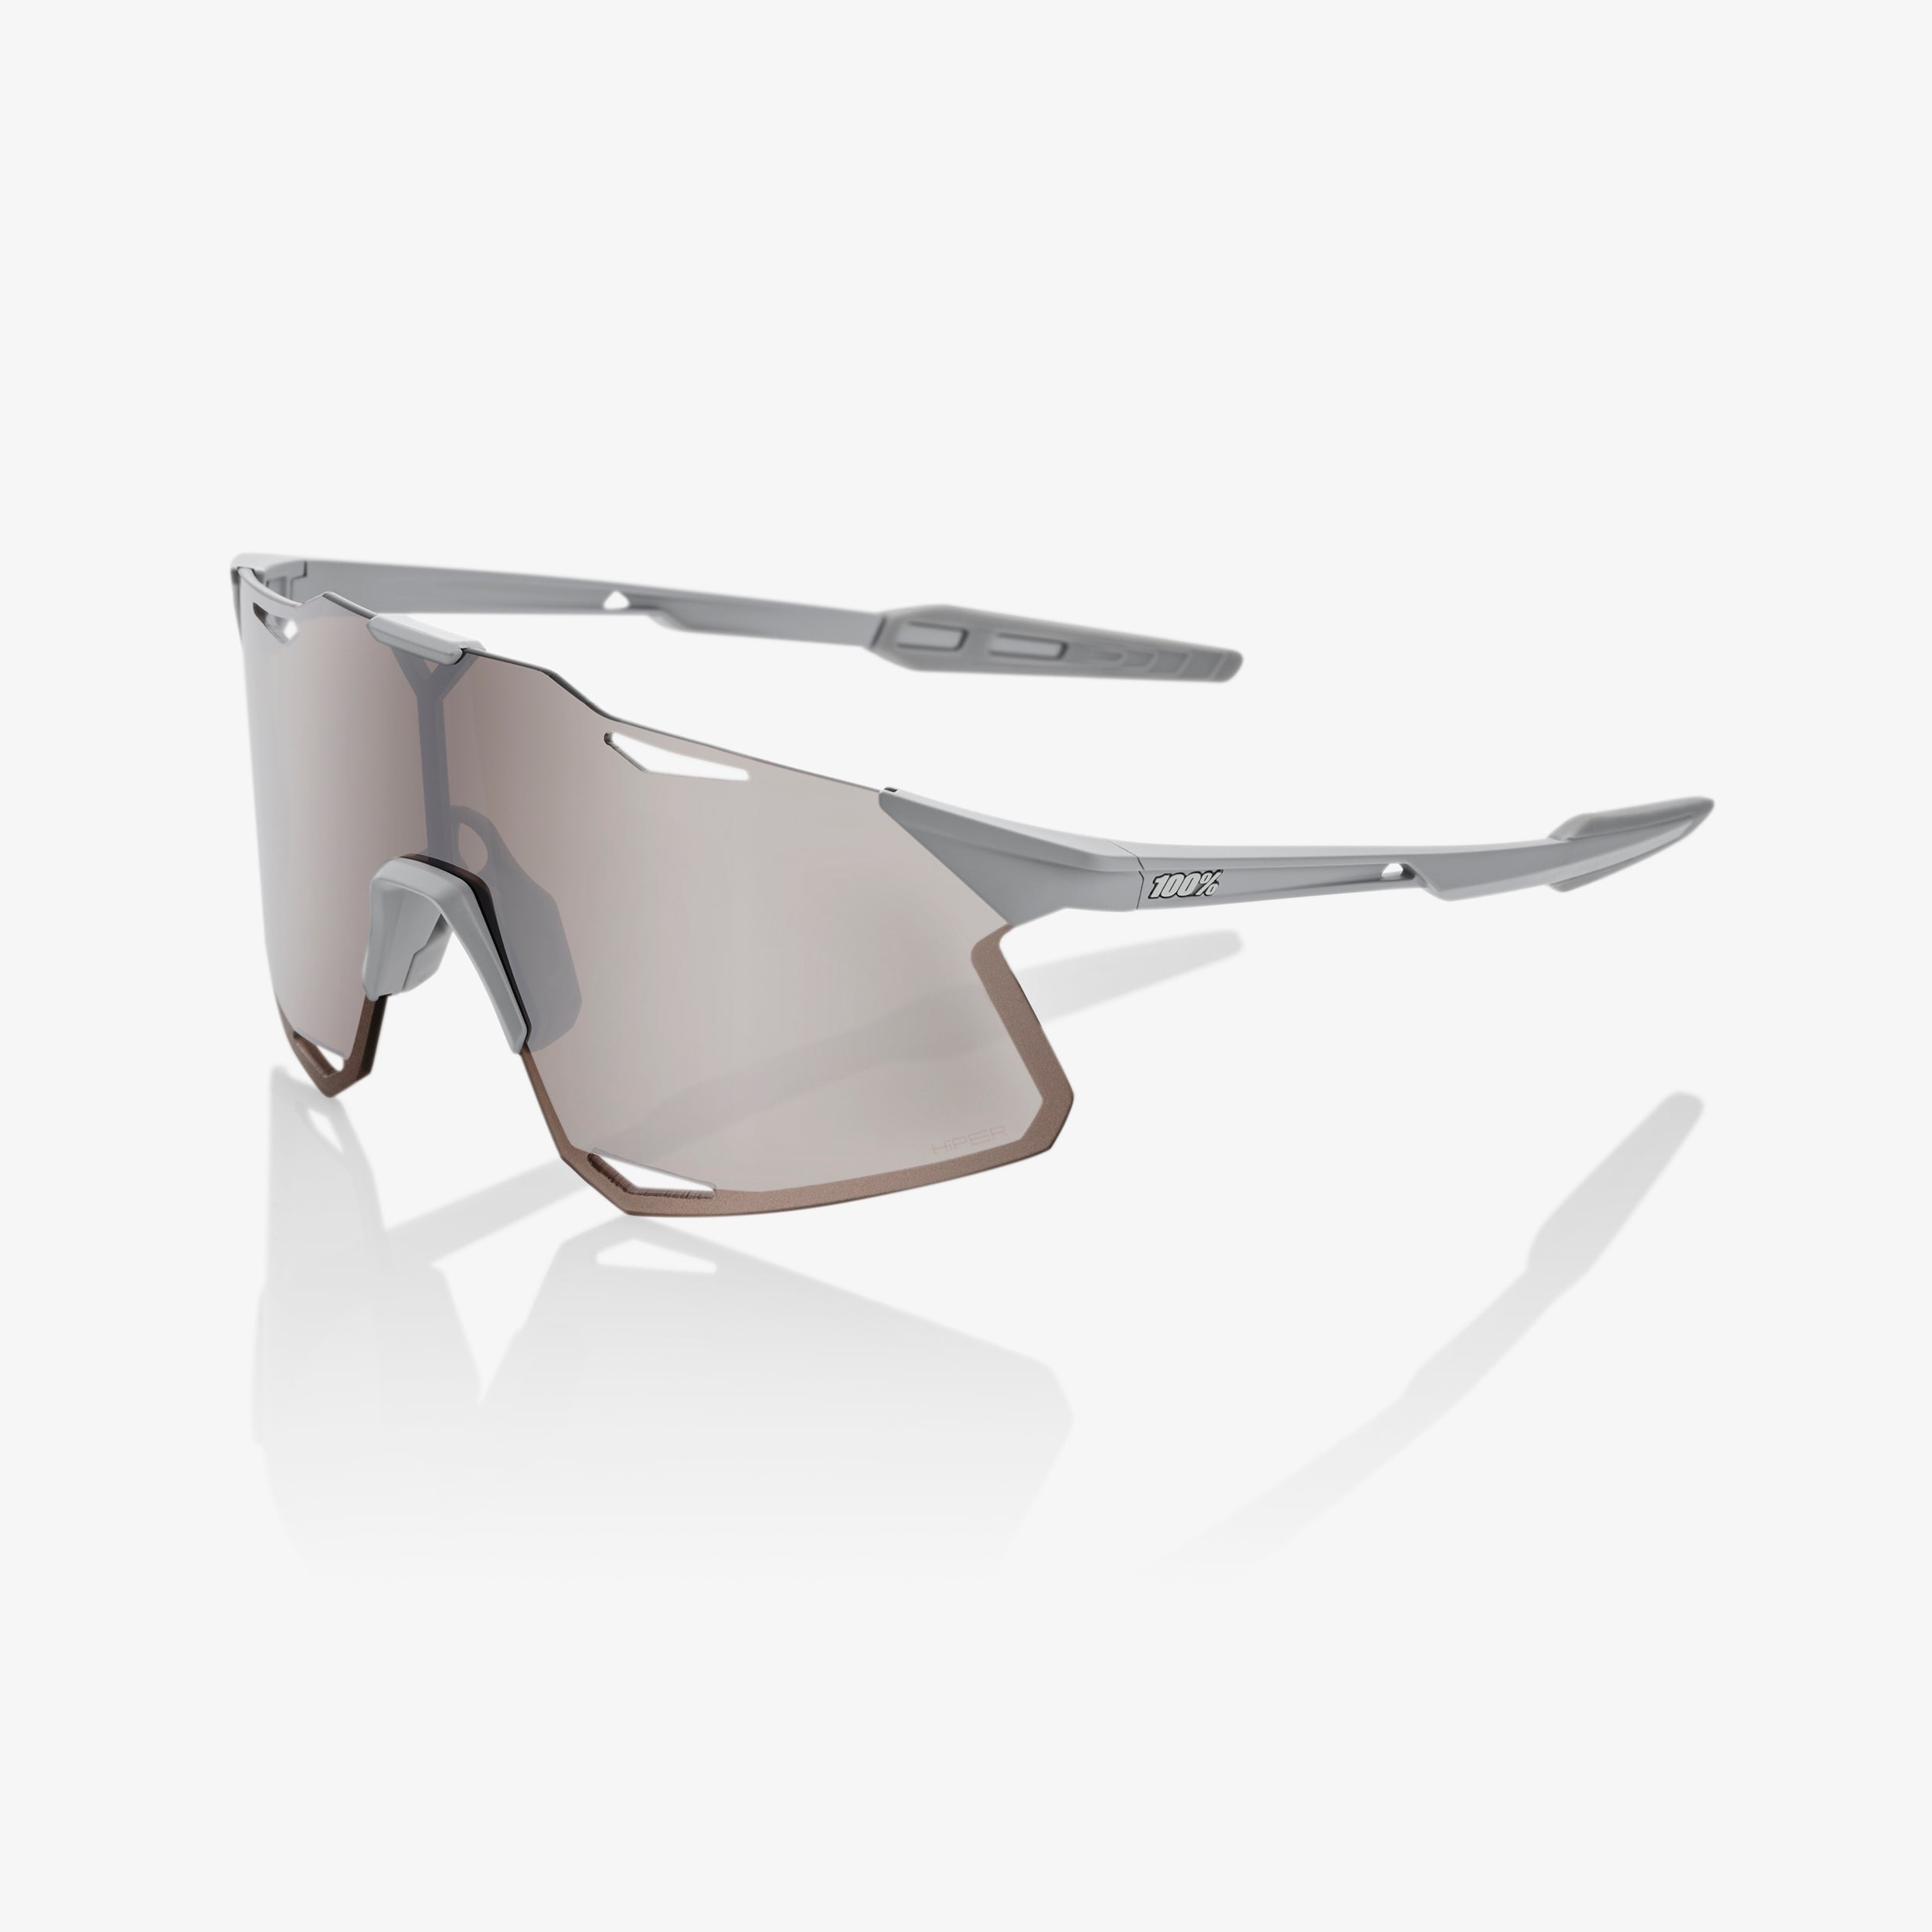 Hypercraft® - Sport Performance Sunglasses | Ride 100%